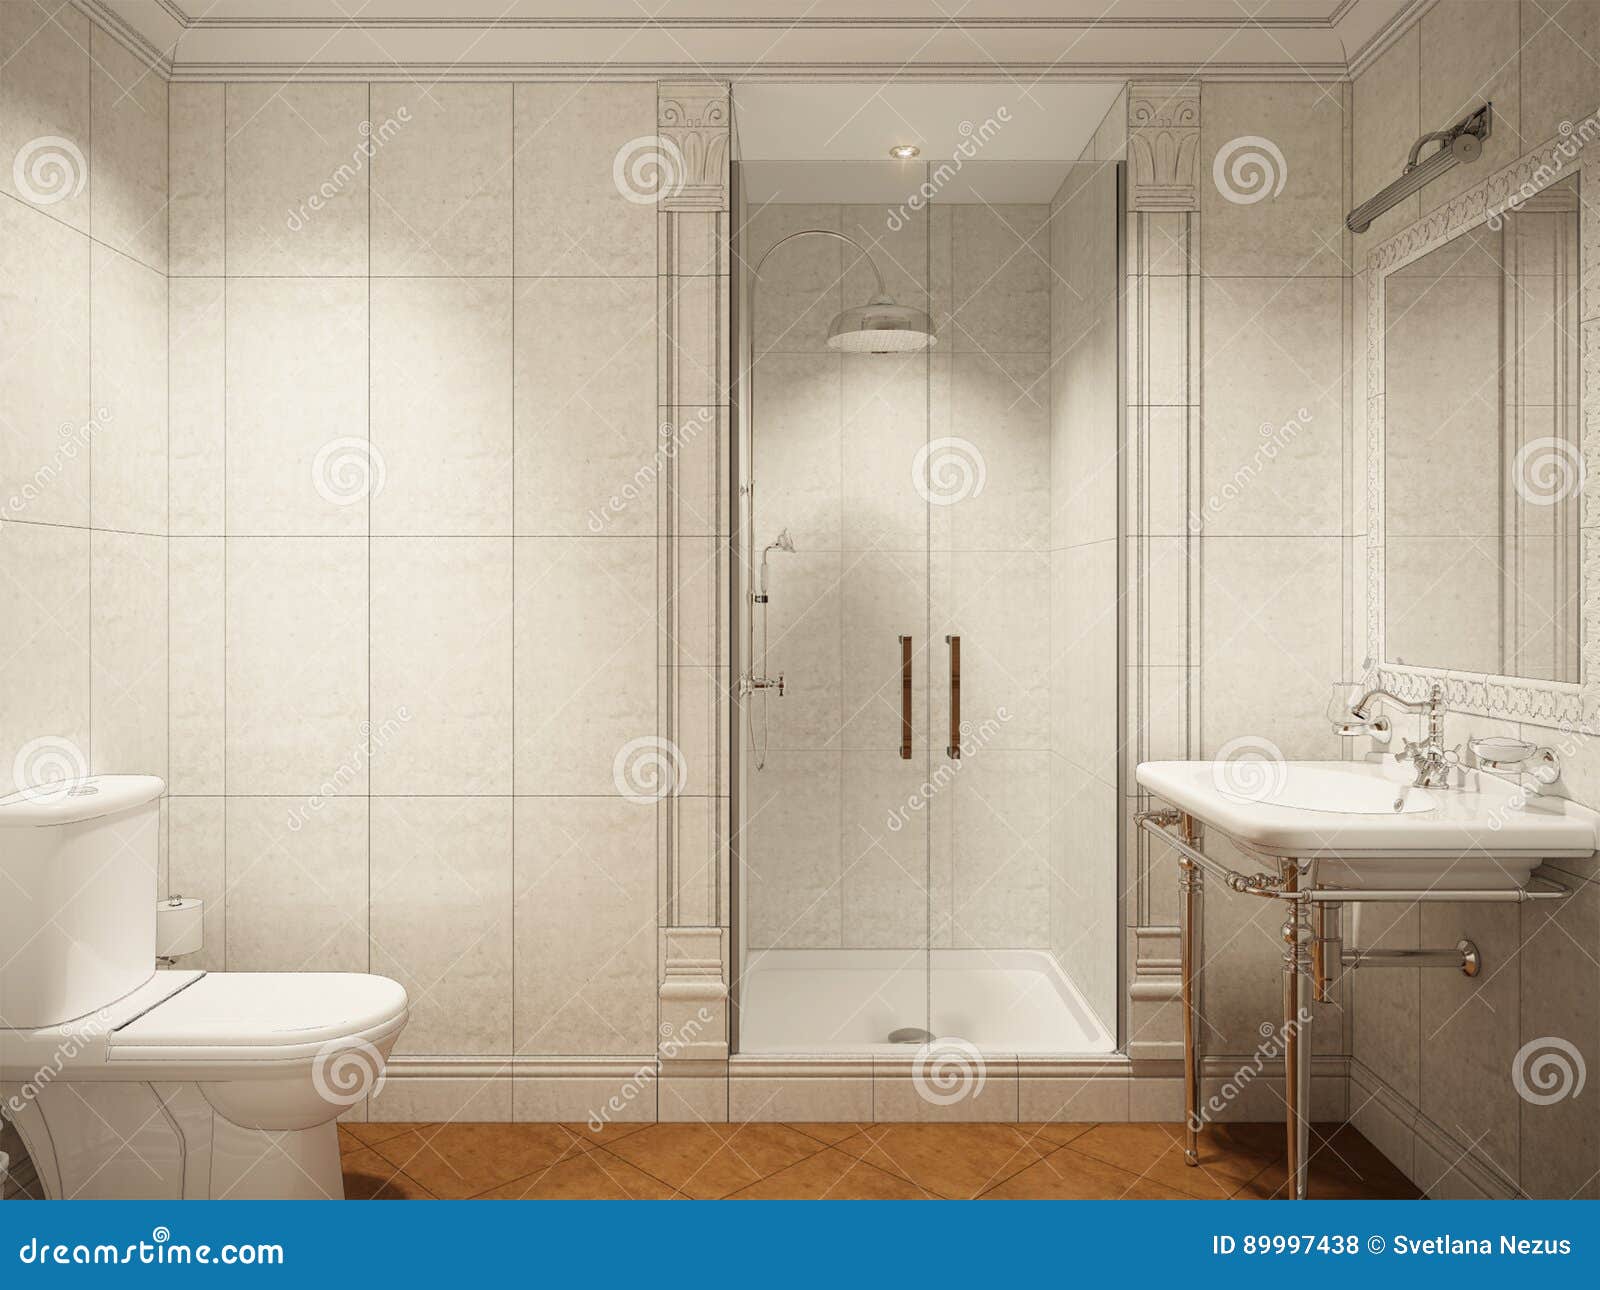 Classic Modern Bathroom Interior Design Stock Illustration - Illustration high, floor: 89997438